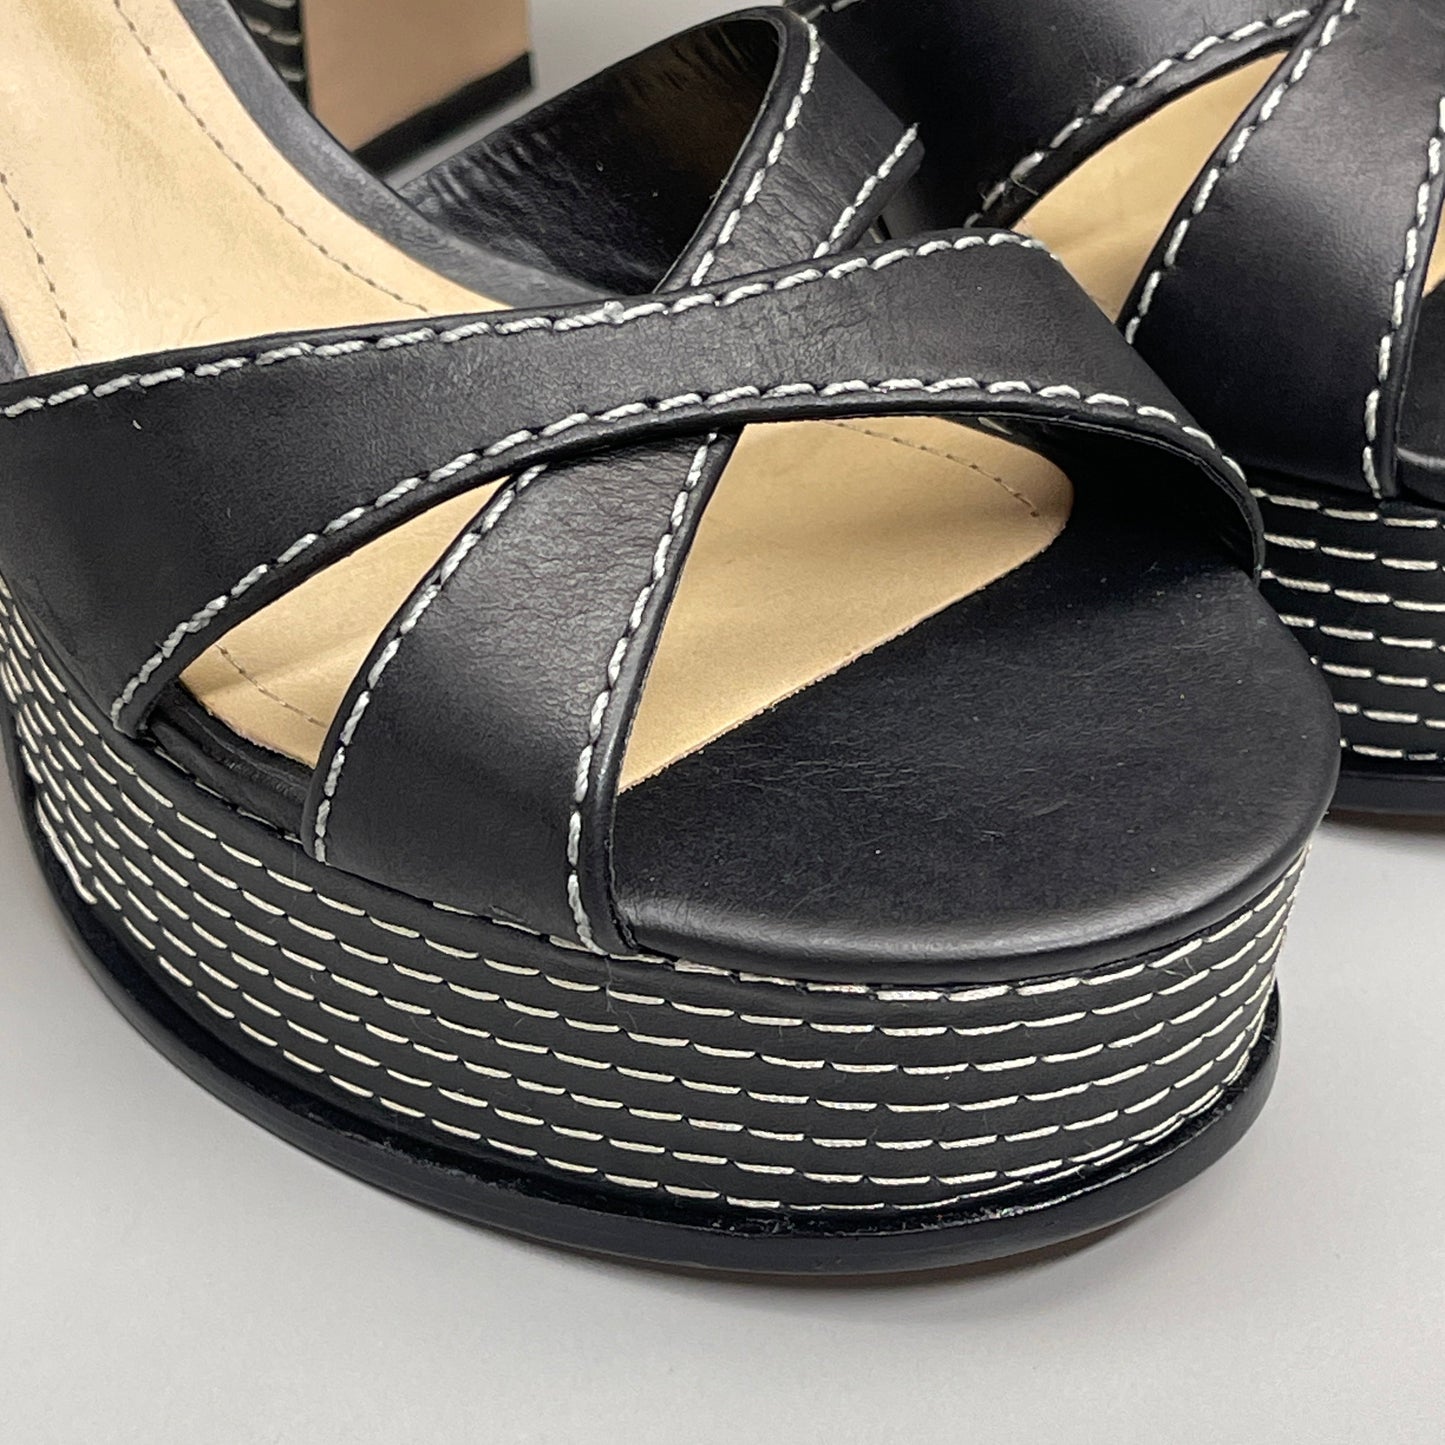 SCHUTZ Keefa Casual Women's Leather Sandal Black Platform 4" Heel Shoes Sz 9B (New)